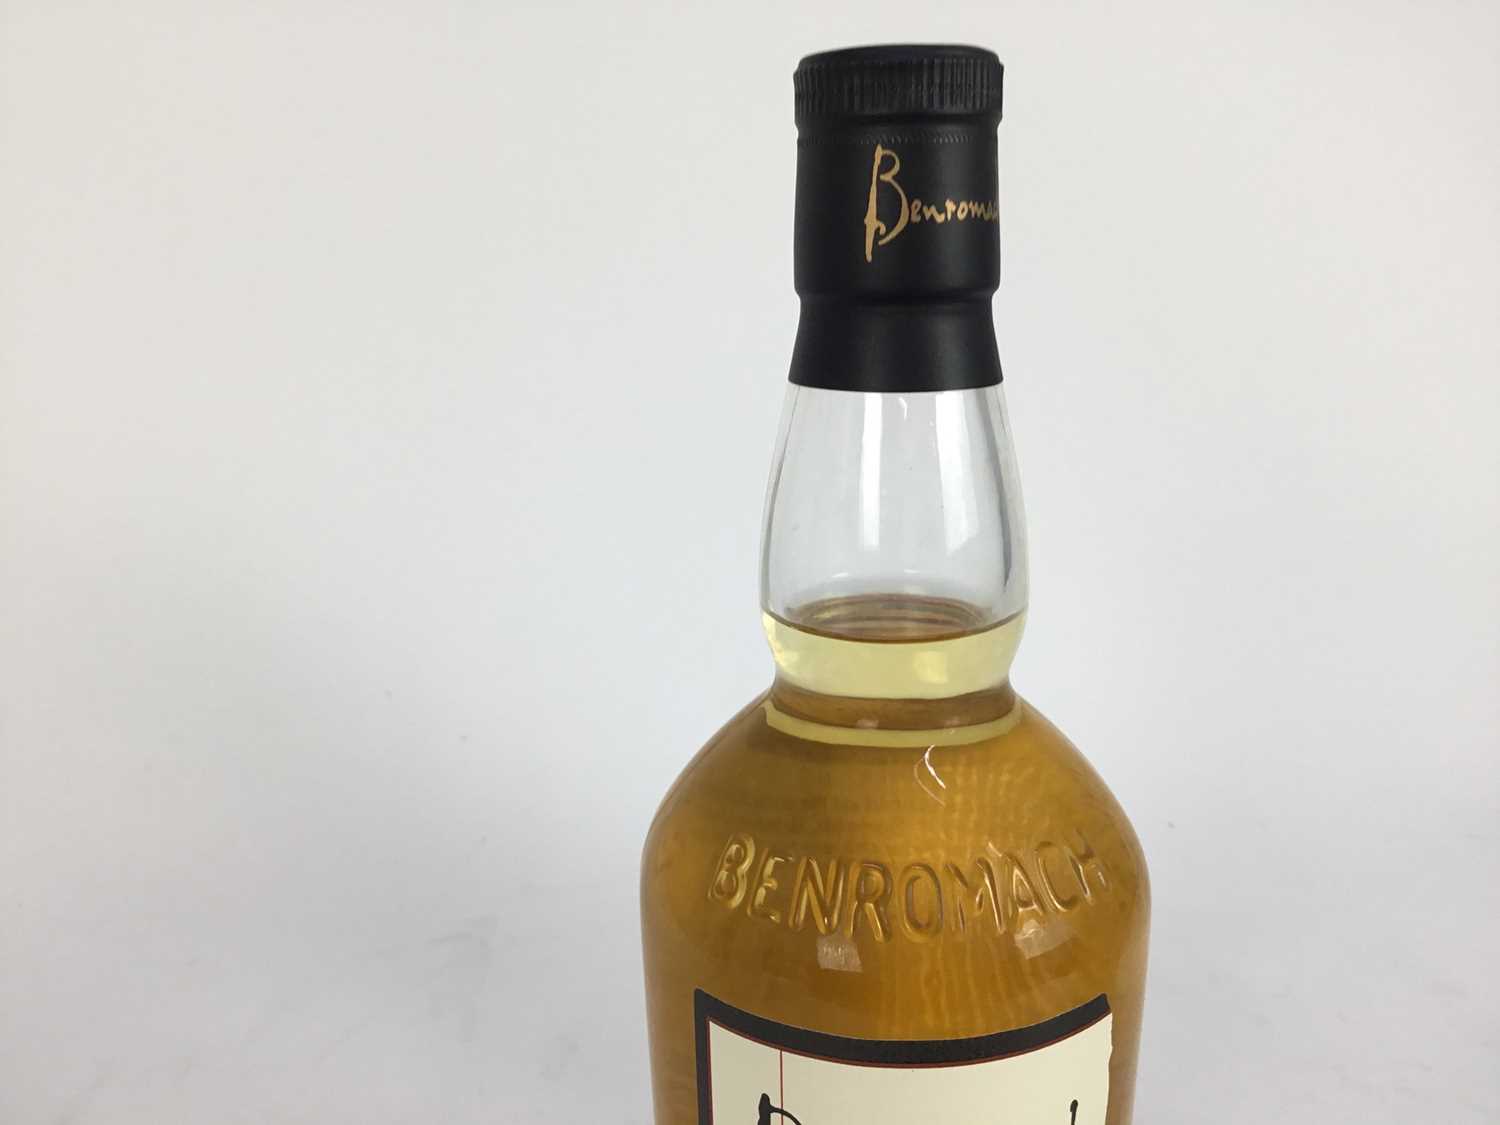 Whisky - one bottle, Benromach single malt, in original tin box - Image 2 of 2